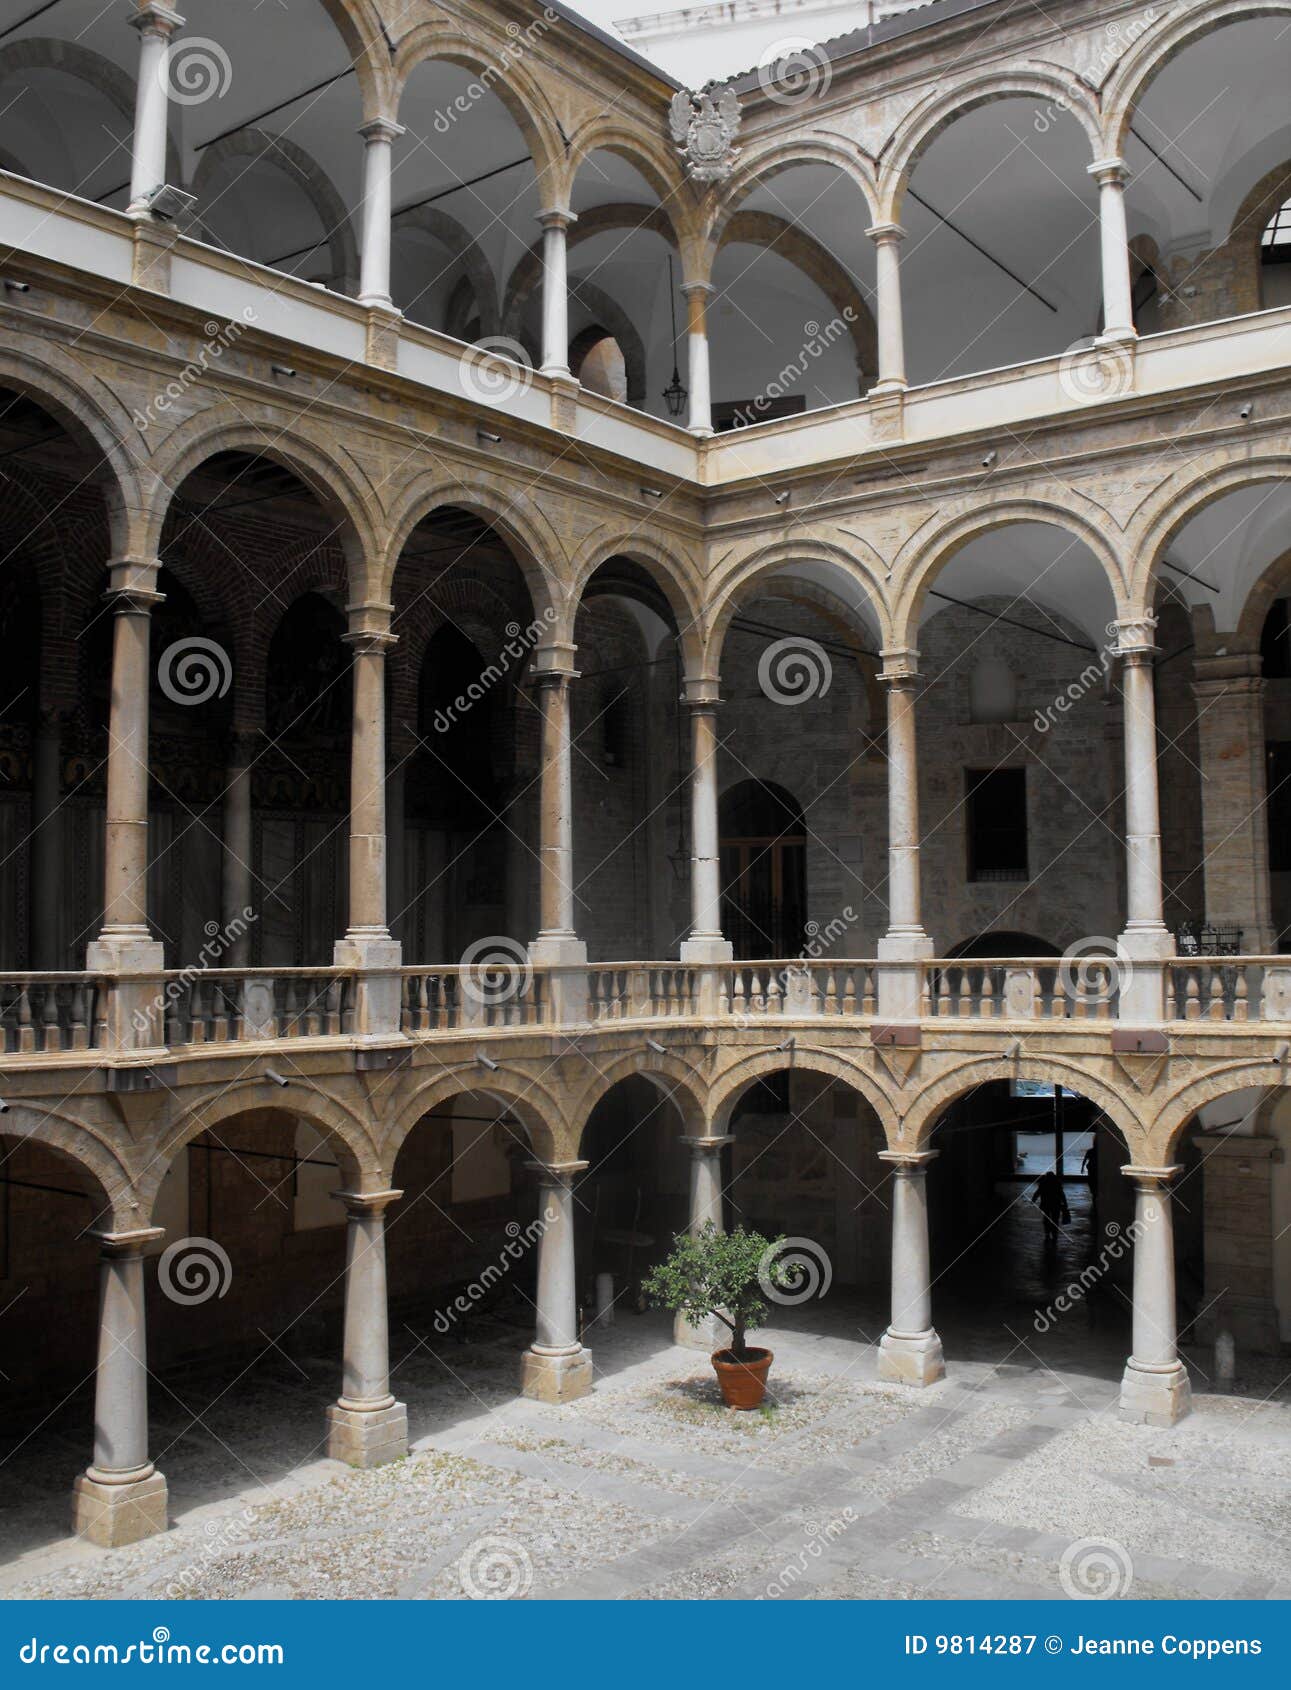 inner courtyard of an italian palace.